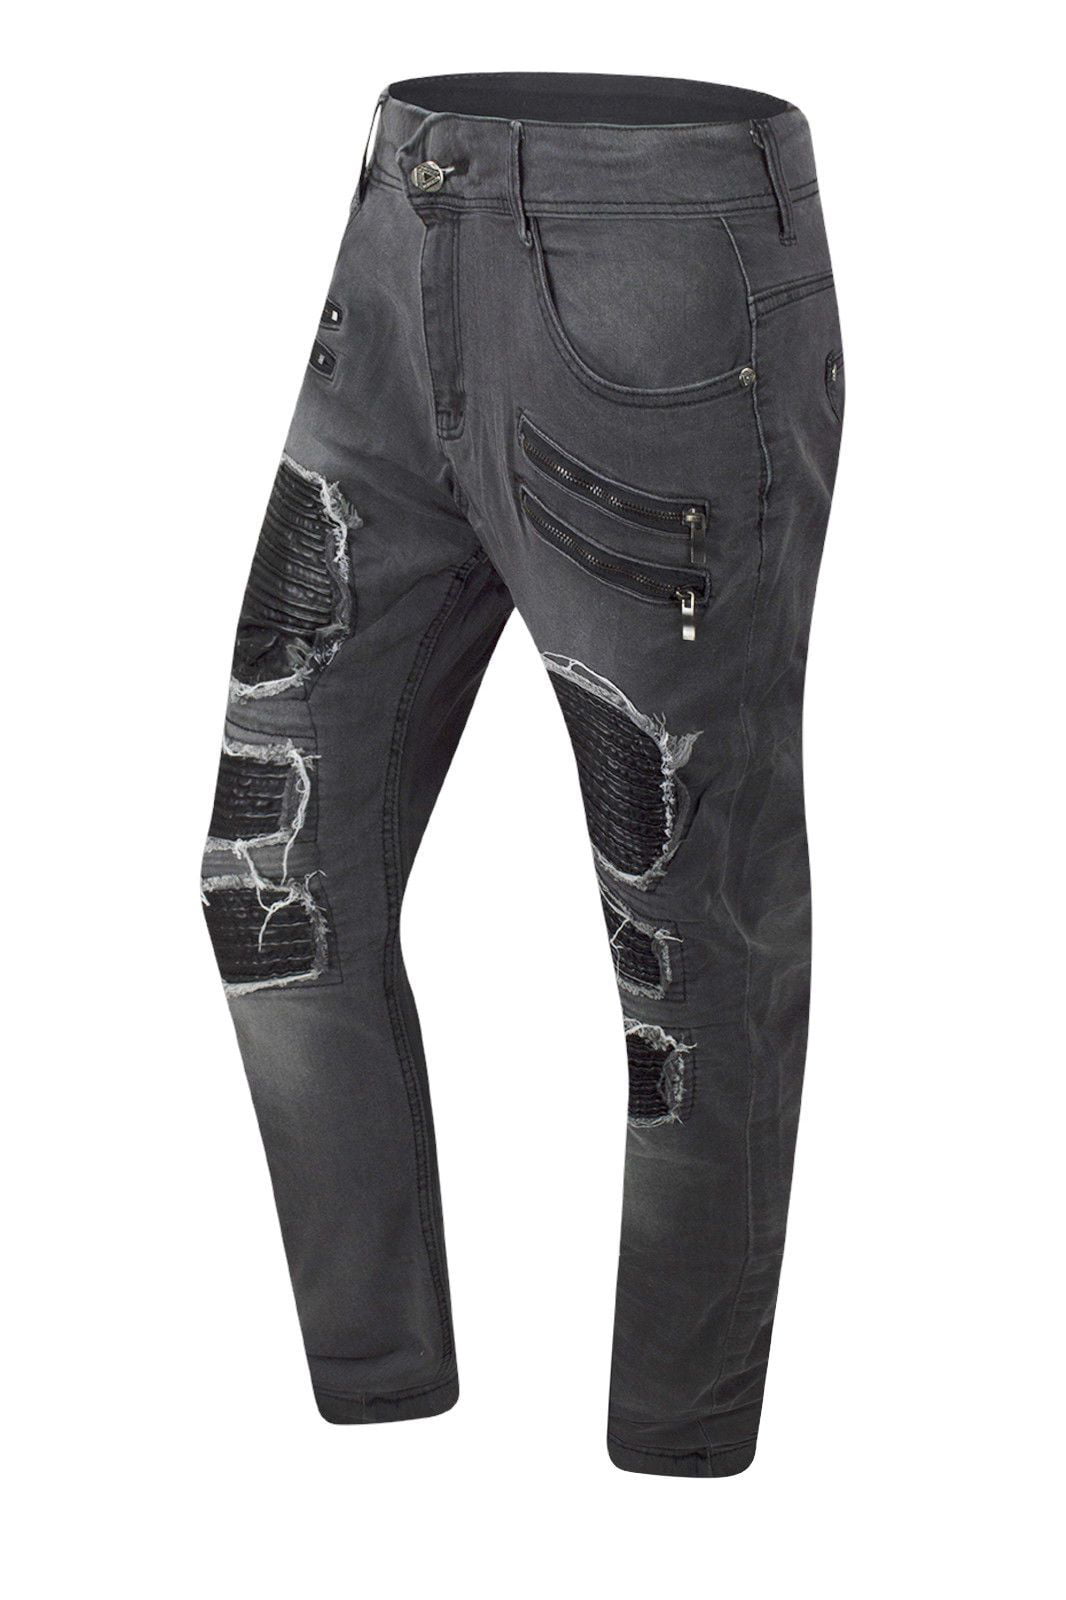 NEW Men Biker Denim Jeans PU Stacked Pants Double Needle Sizes 30-38 Black White 